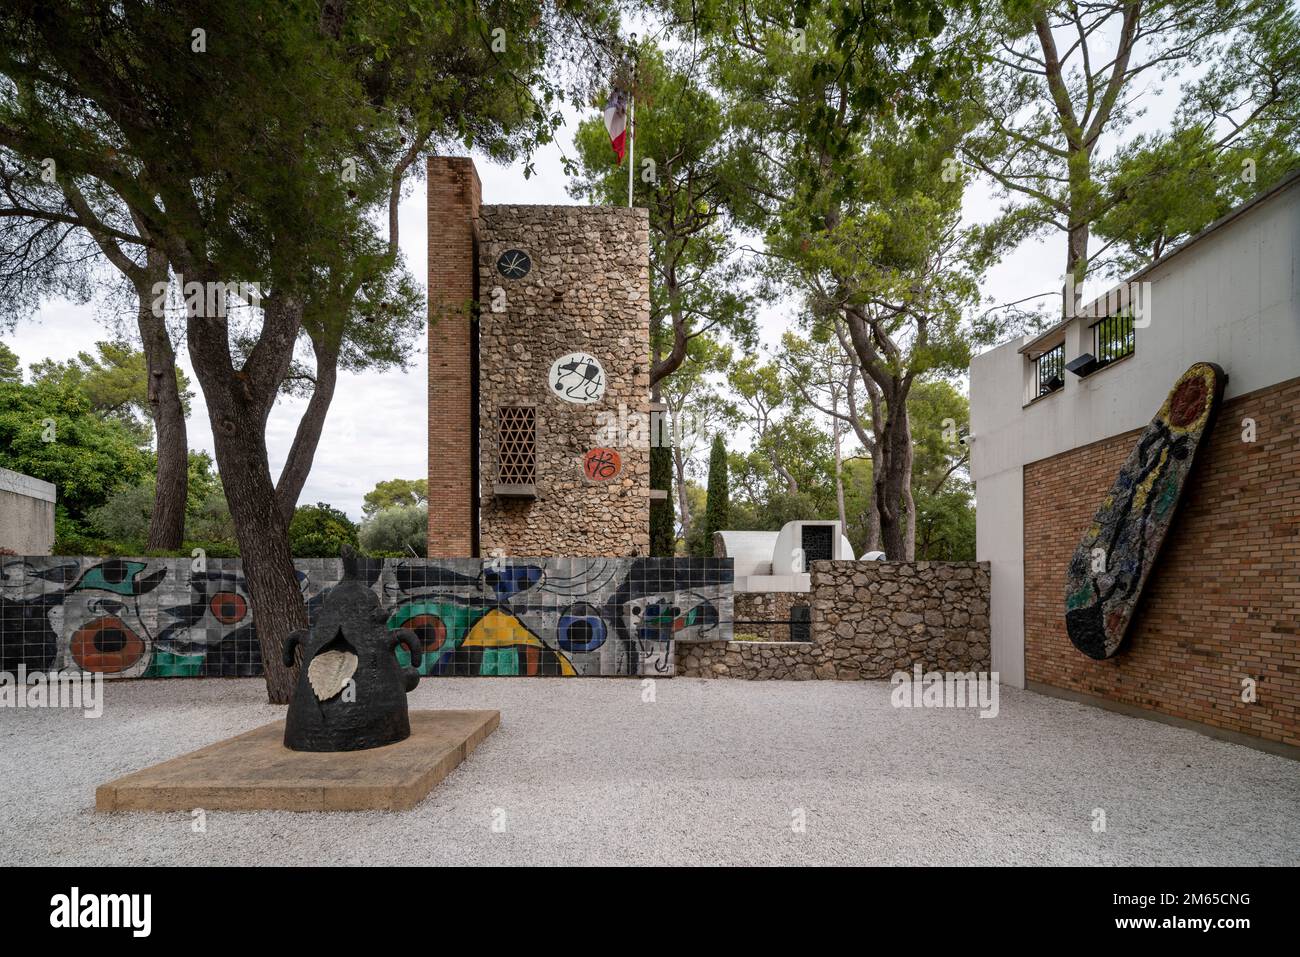 Saint-Paul-de-Vence, Museo Fondation Maeght, 1964 von Josep Lluís Sert erbaut, Labyrinth, mit Keramikwand und Plastiken von Joan Miró Foto Stock